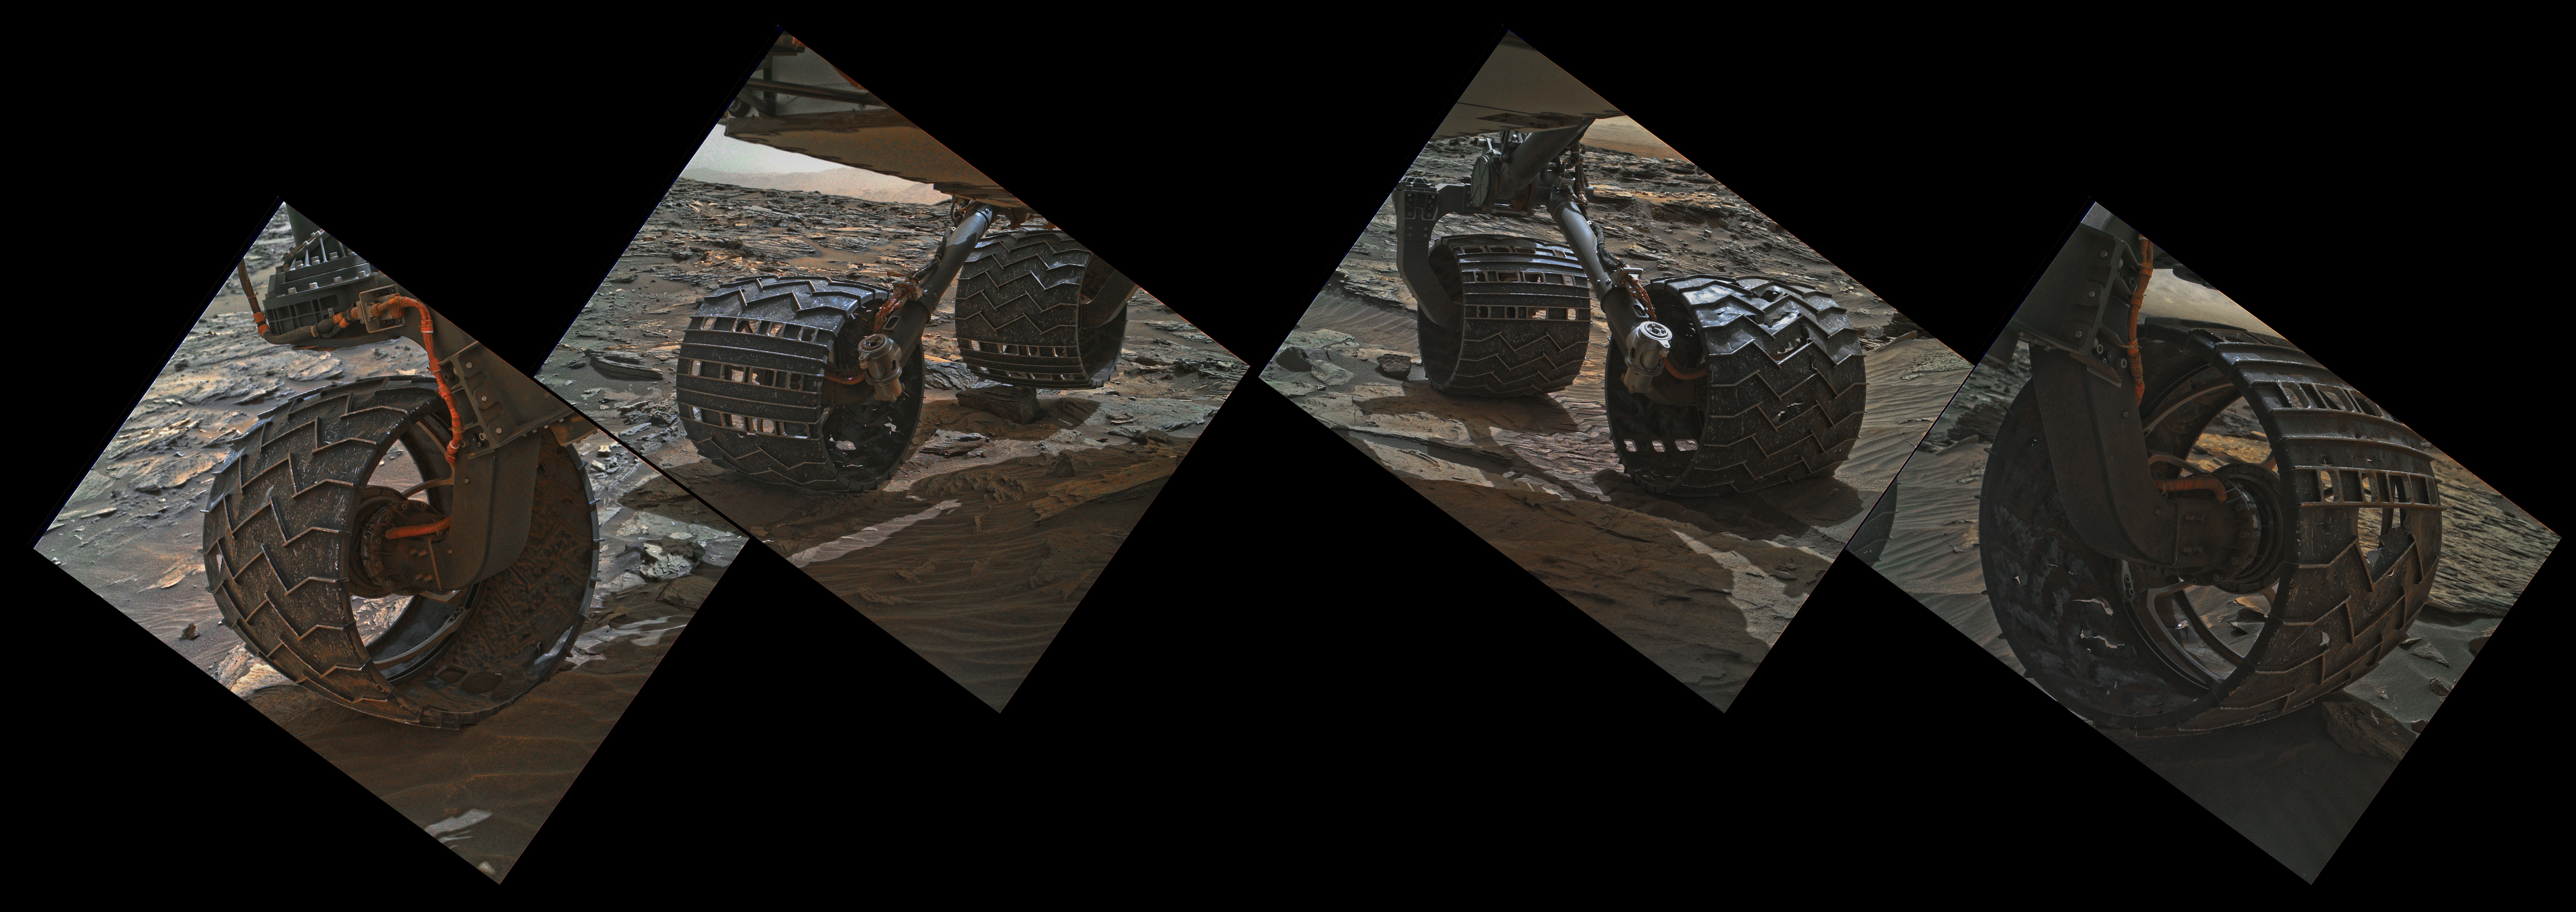 Curiosity MAHLI sol 1087